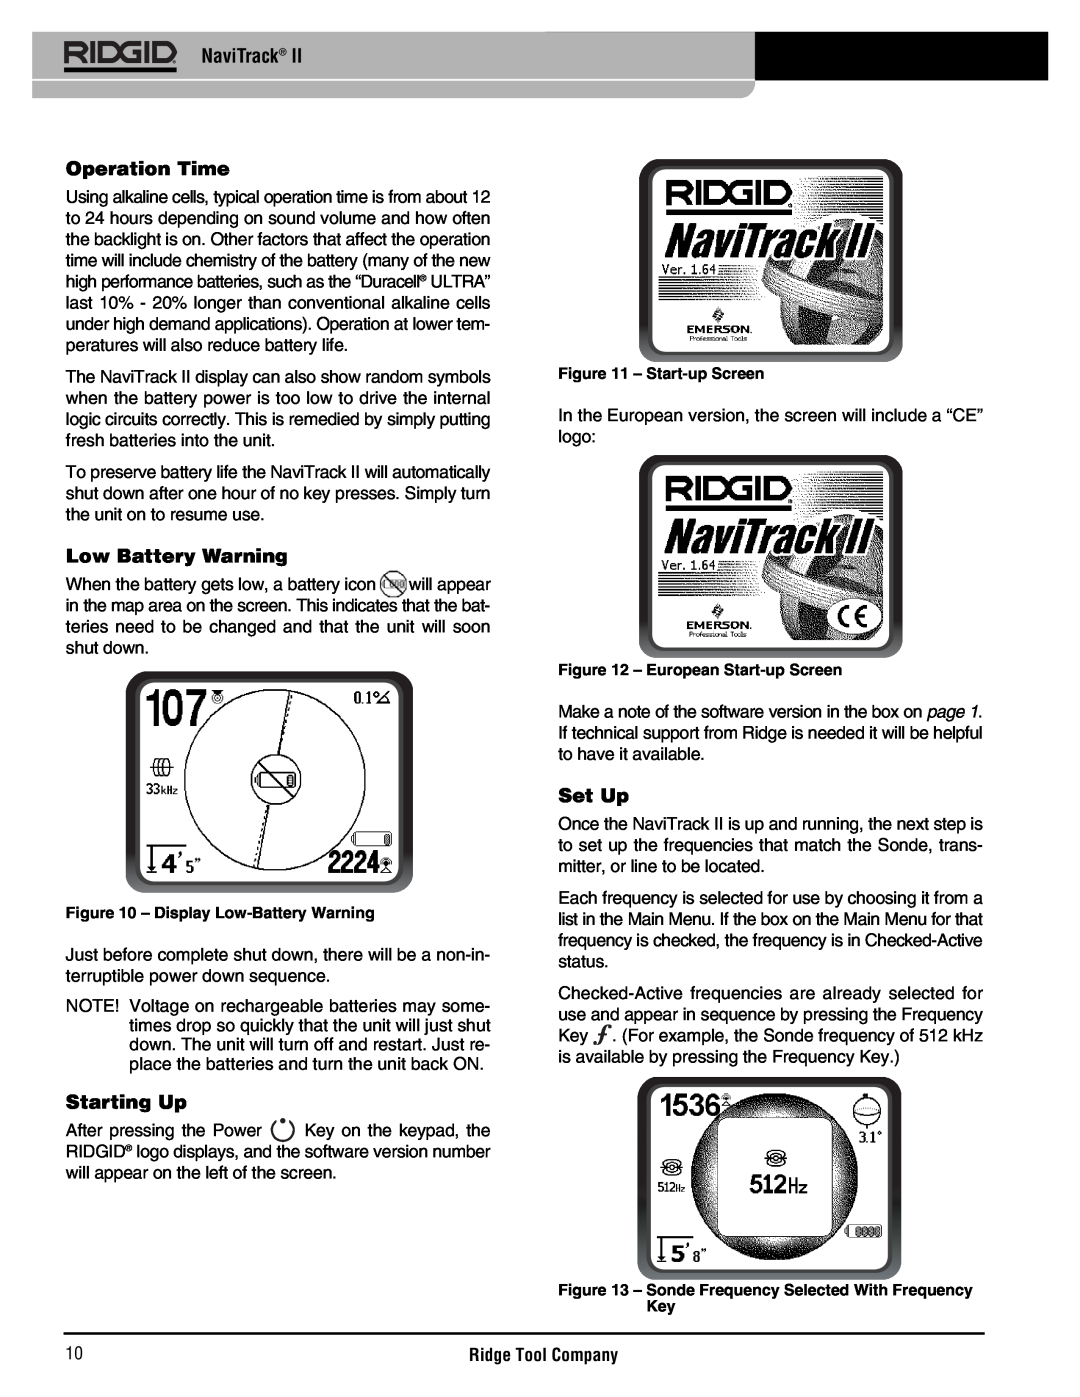 RIDGID Metal Detector manual Operation Time, Low Battery Warning, Starting Up, Set Up, NaviTrack 